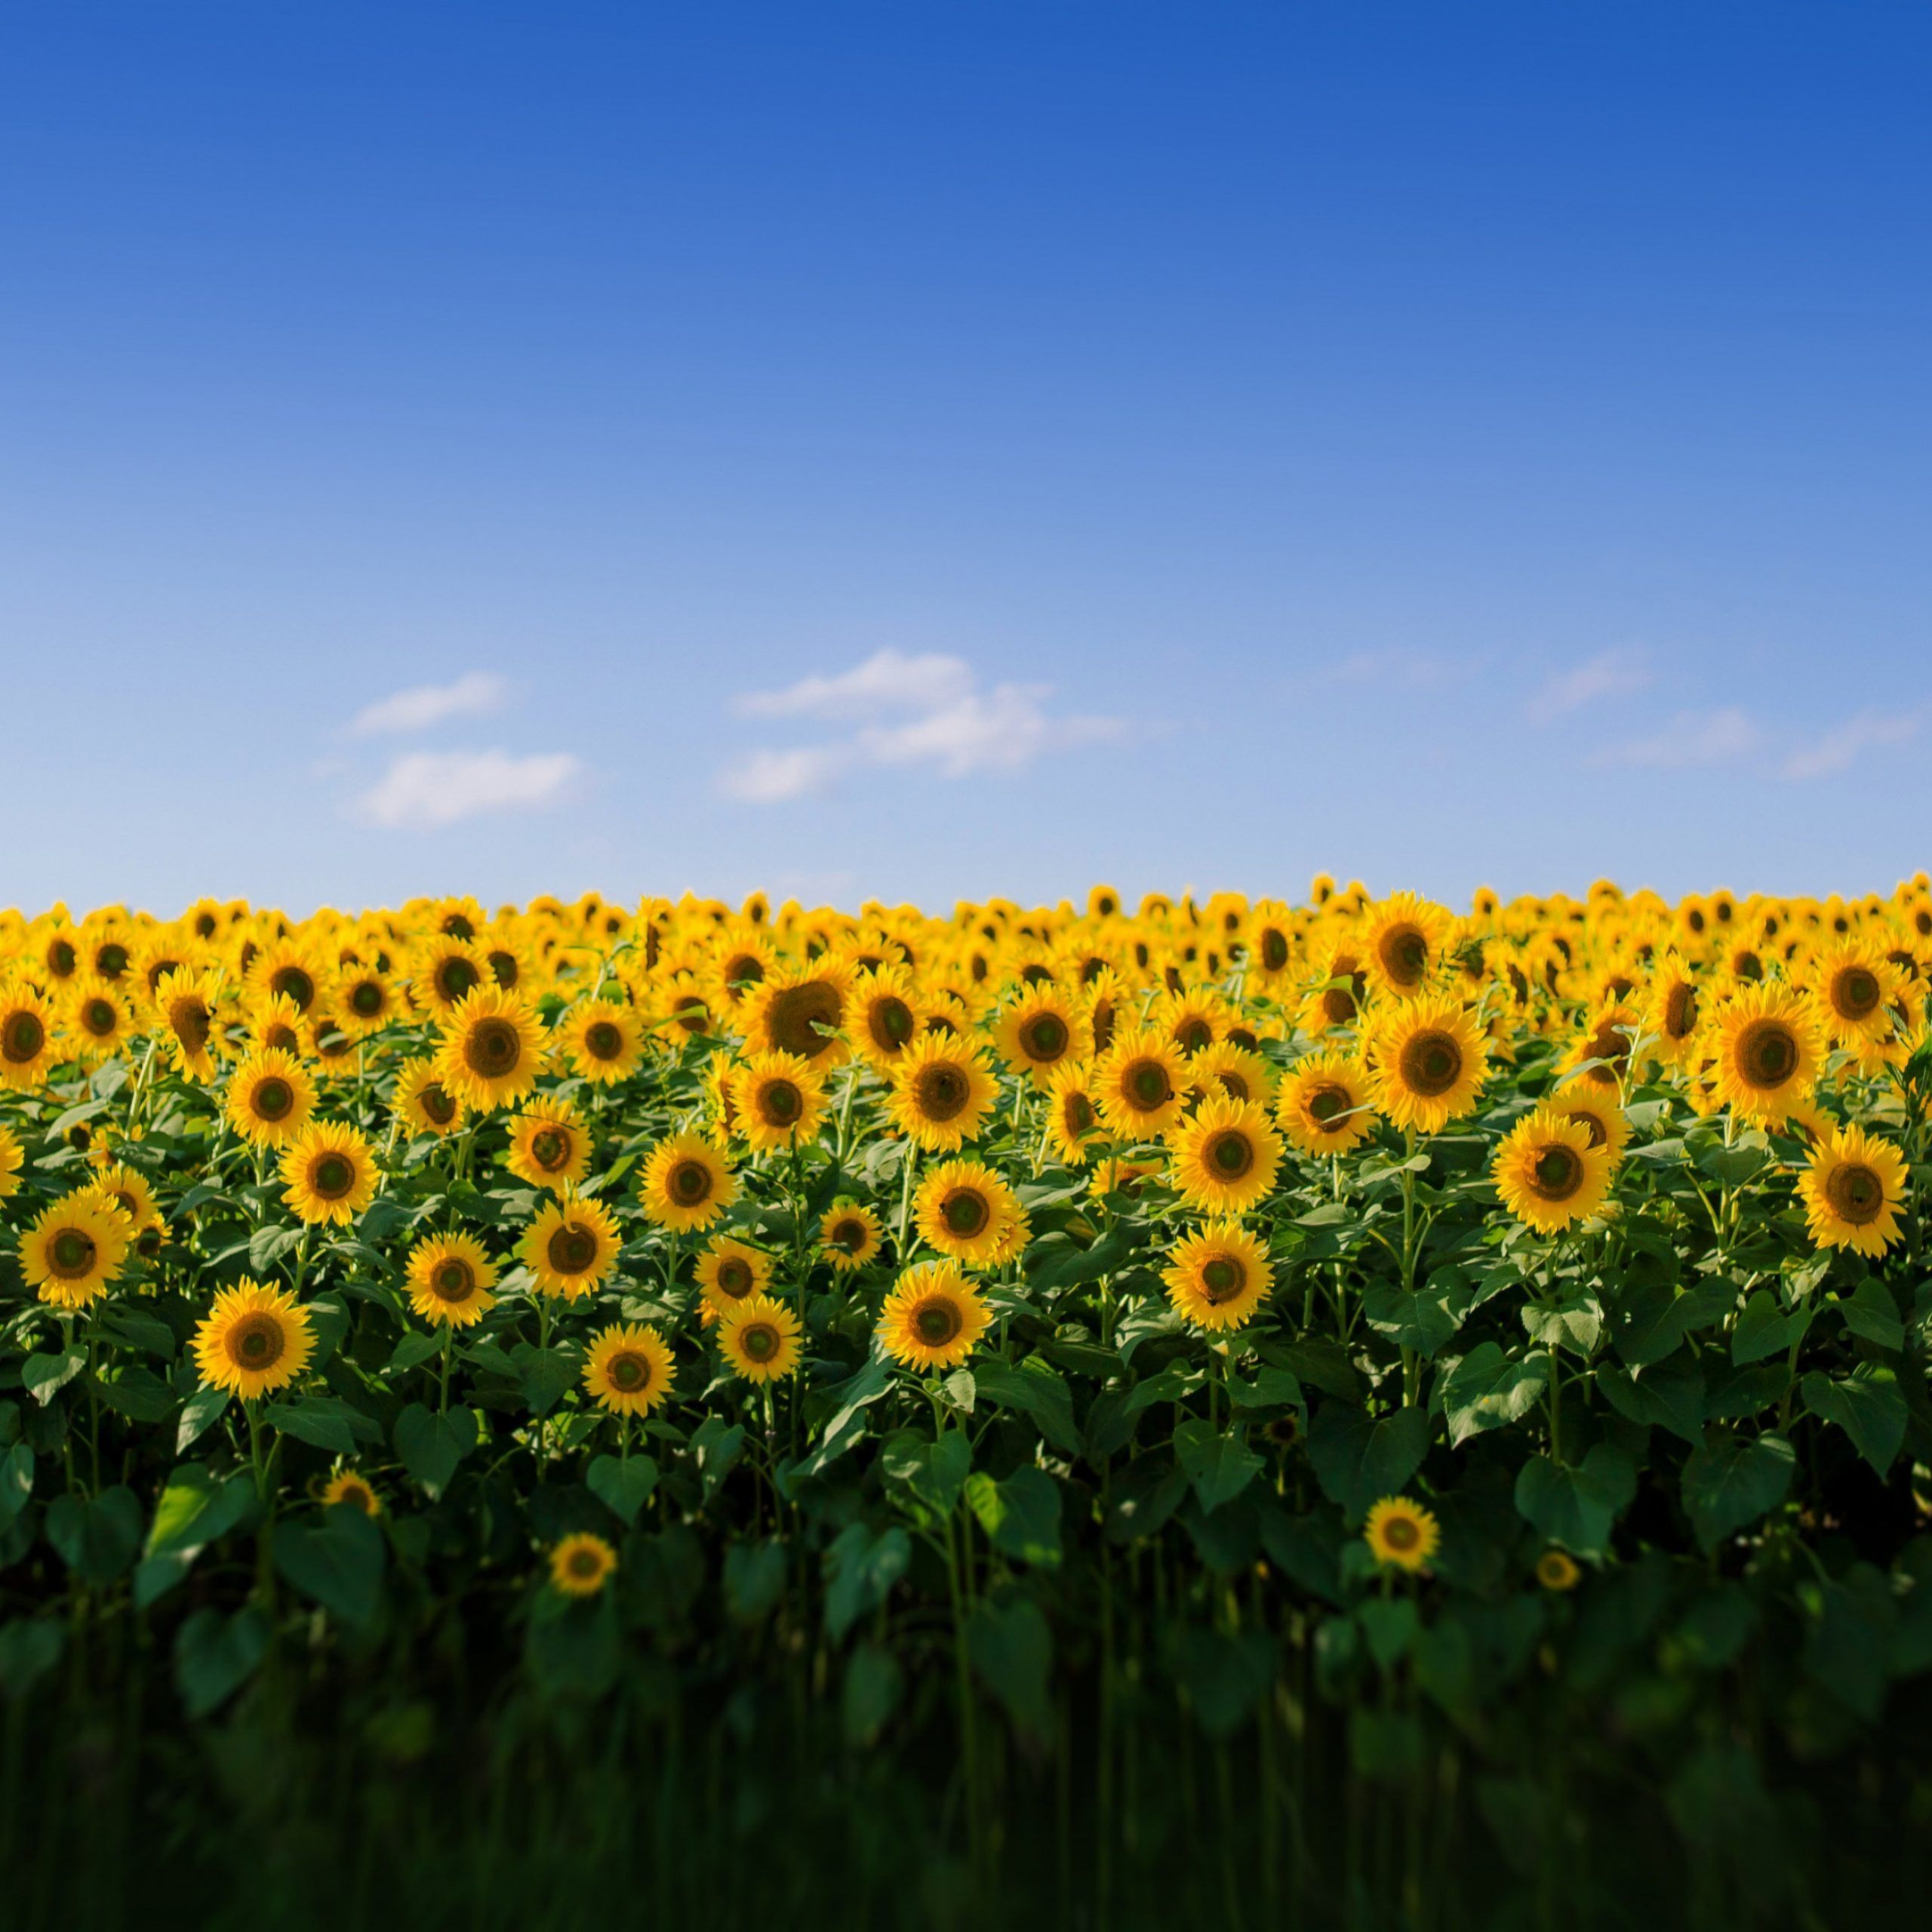 Download Sunflower Field Aesthetic UltraHD Wallpaper